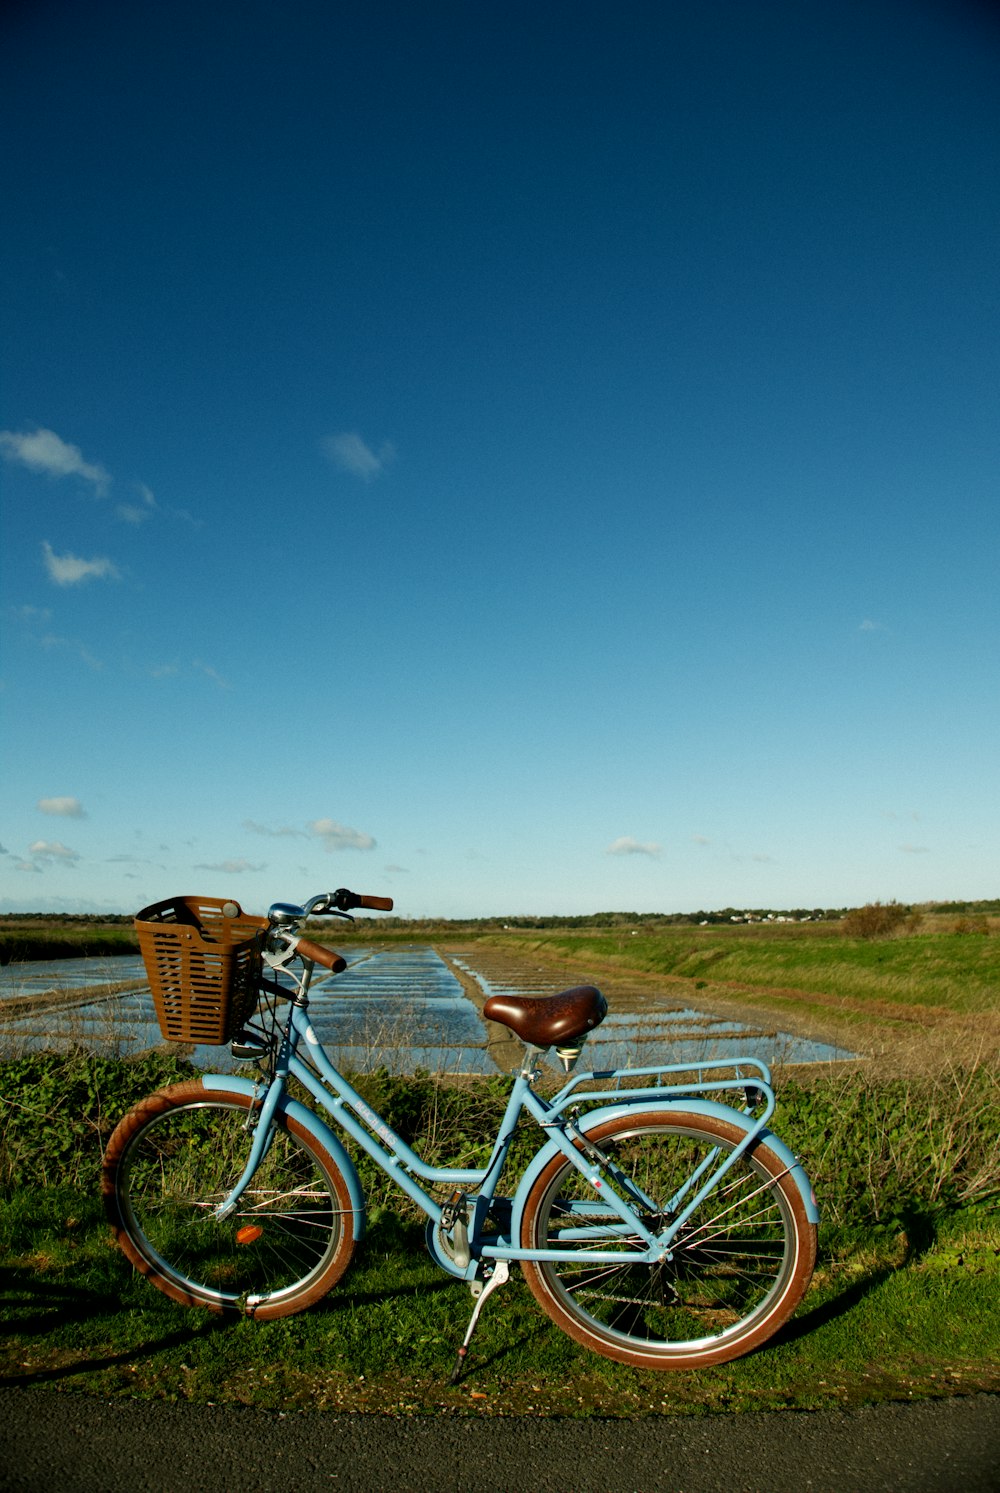 blue city bike on green grass field under blue sky during daytime